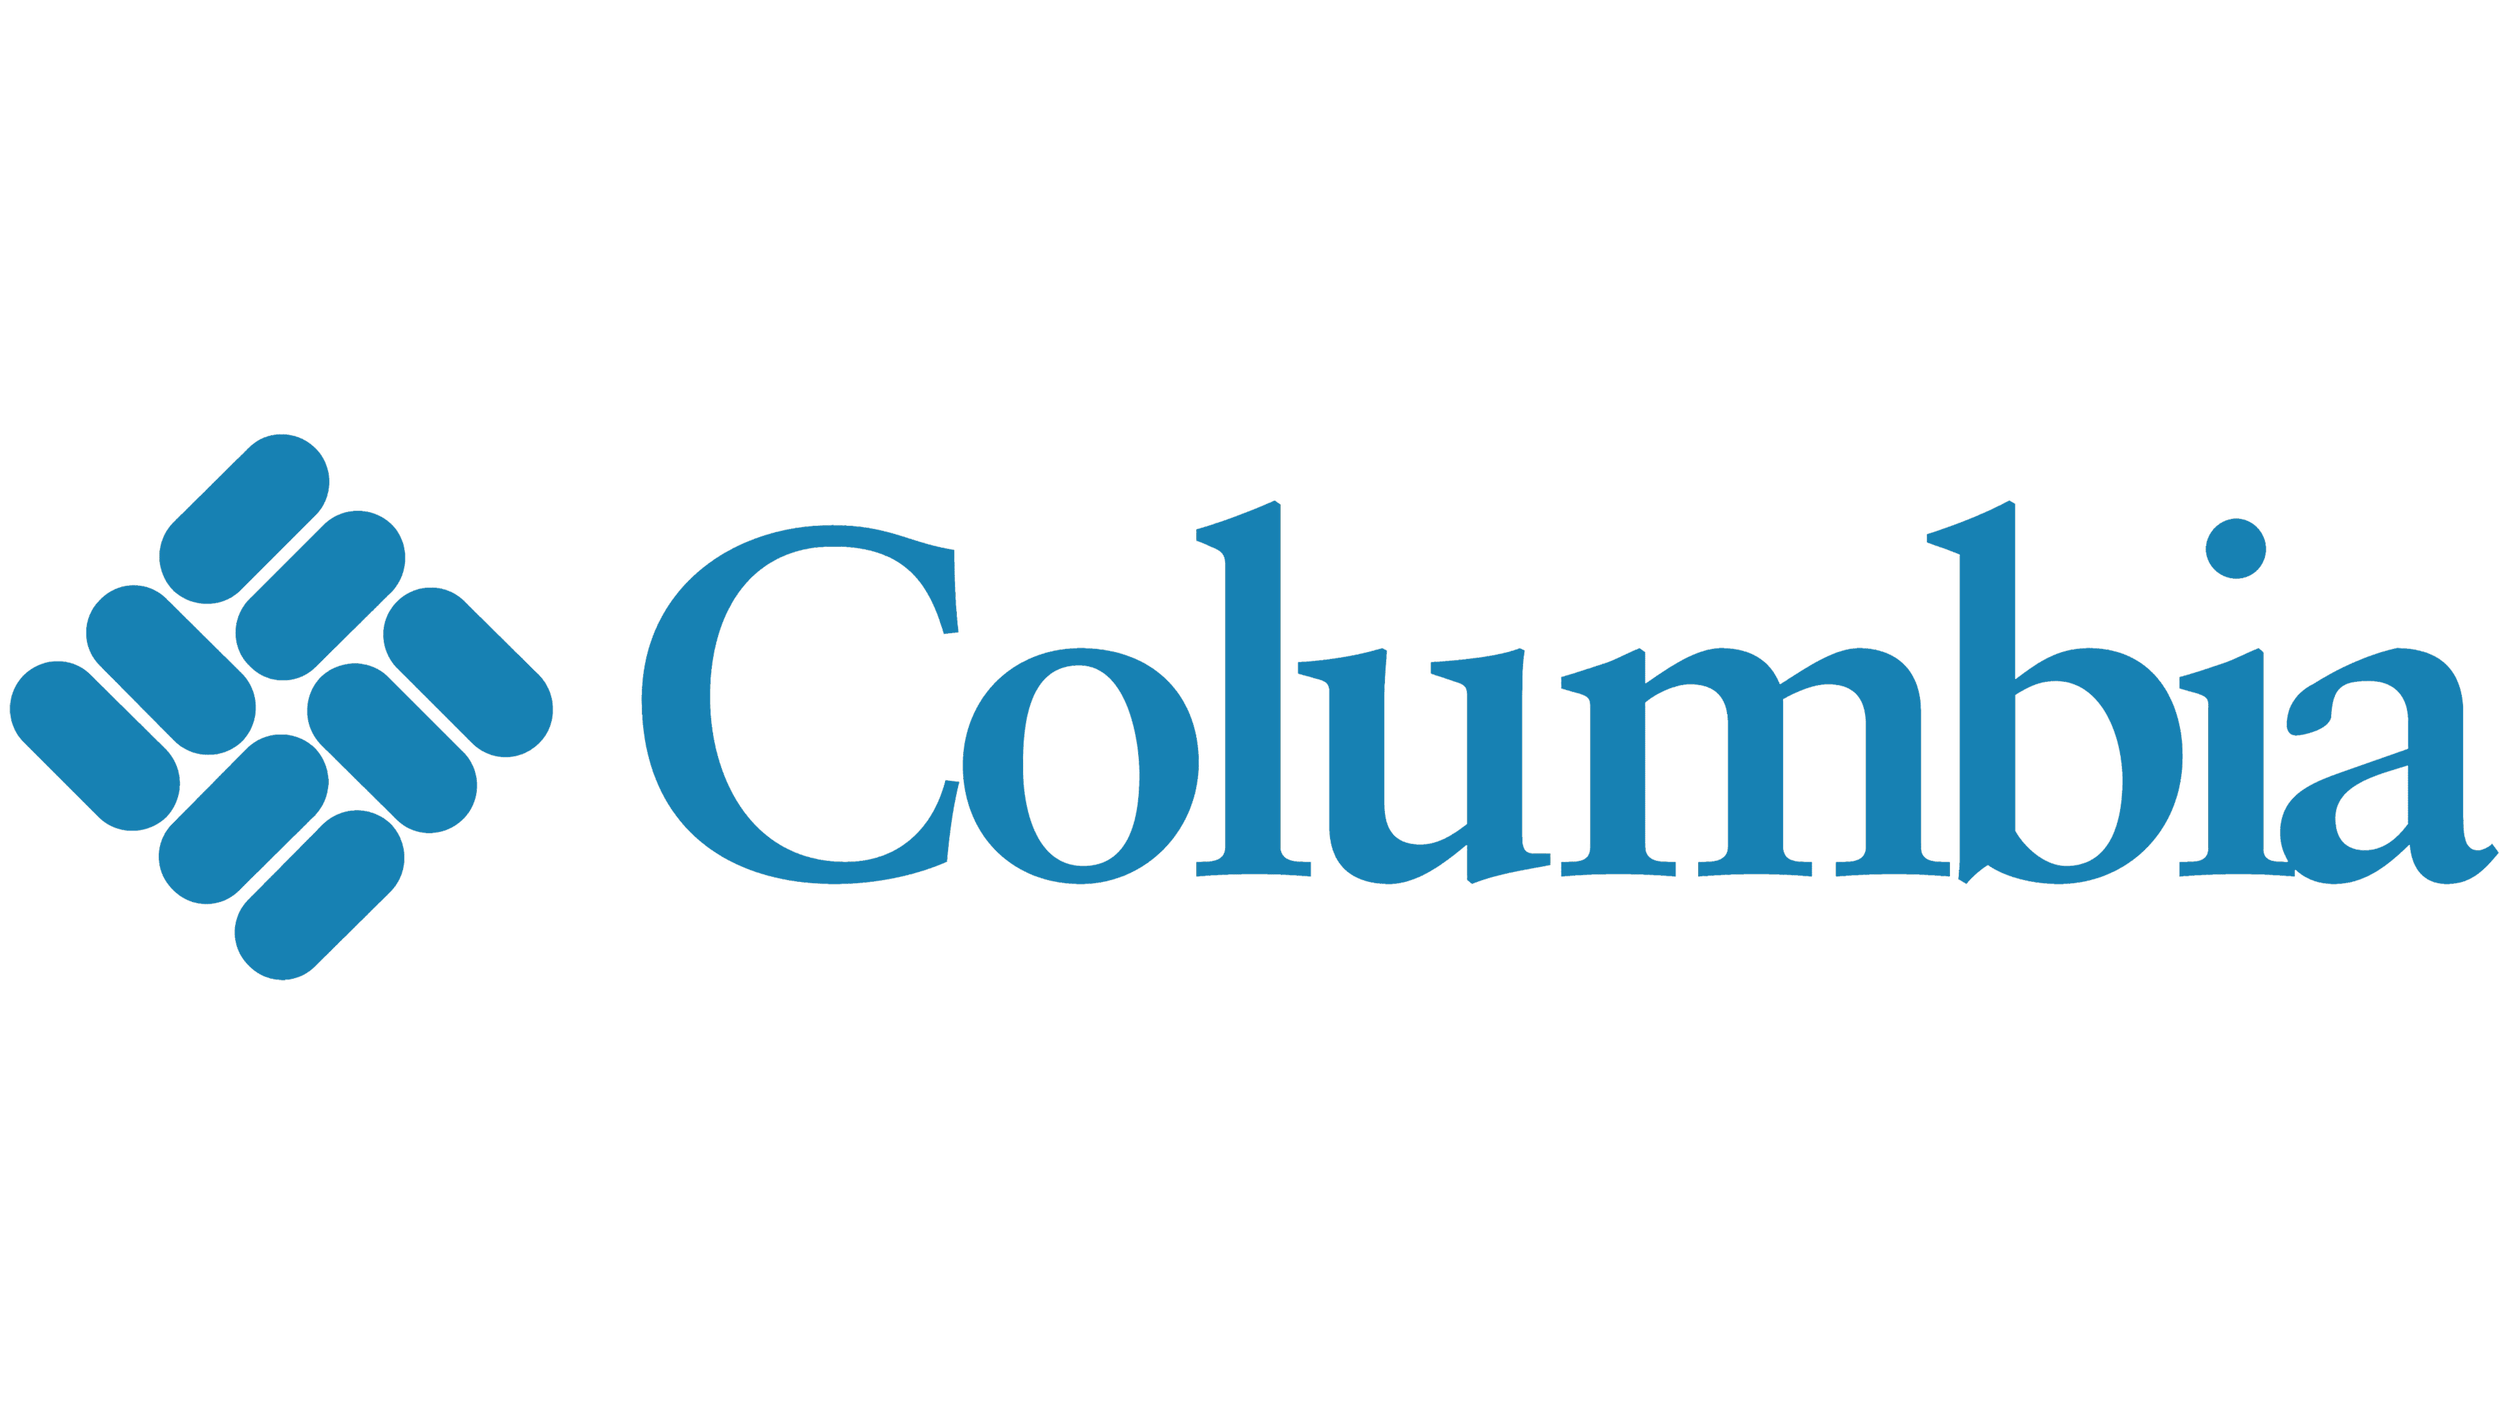 Logo-Columbia.png